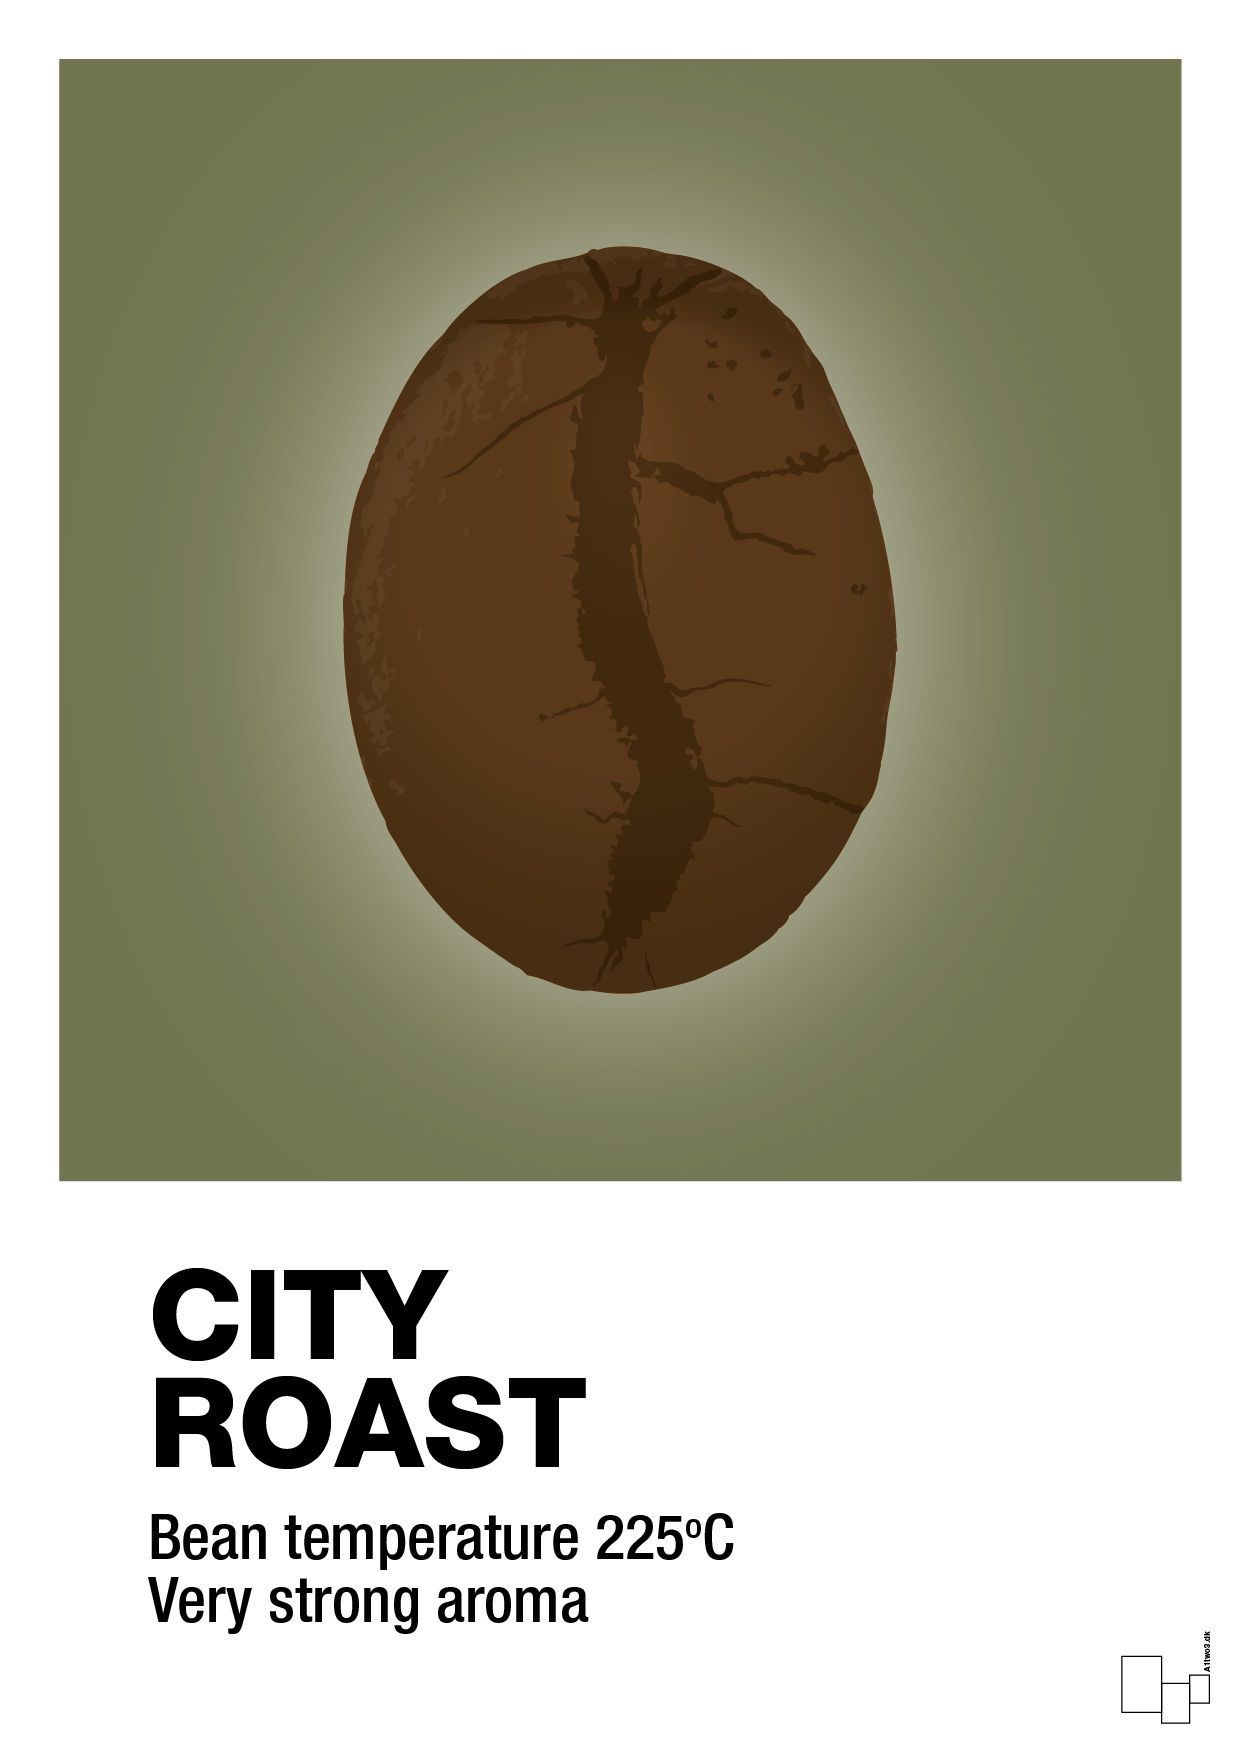 city roast - Plakat med Mad & Drikke i Secret Meadow